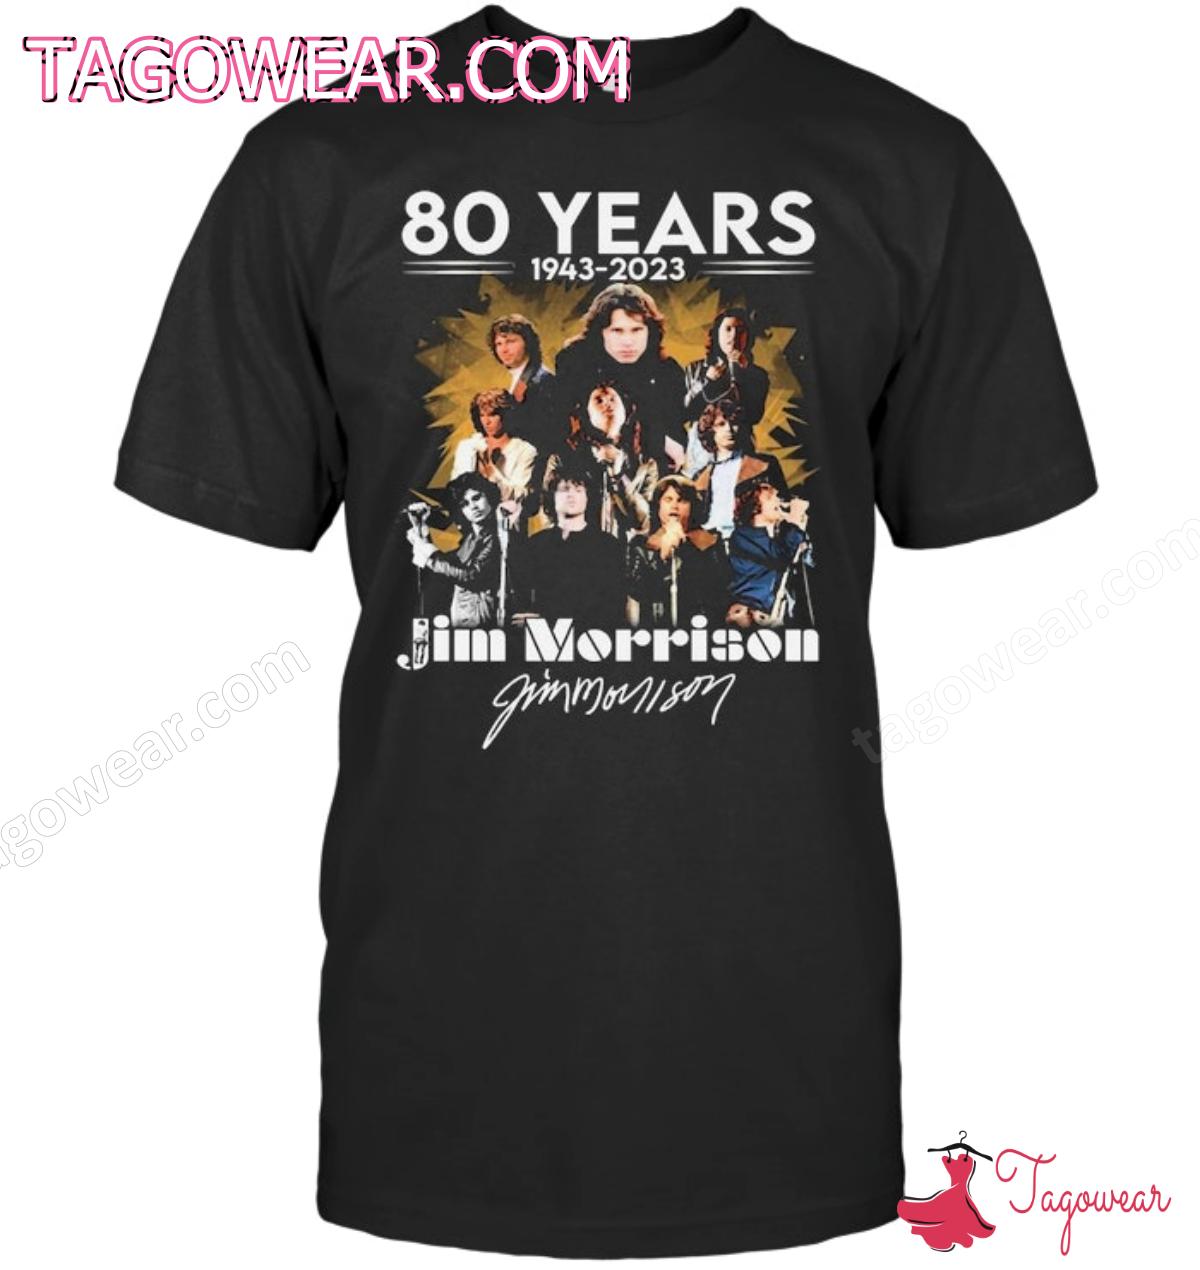 80 Years 1943-2023 Jim Morrison Signature Shirt a